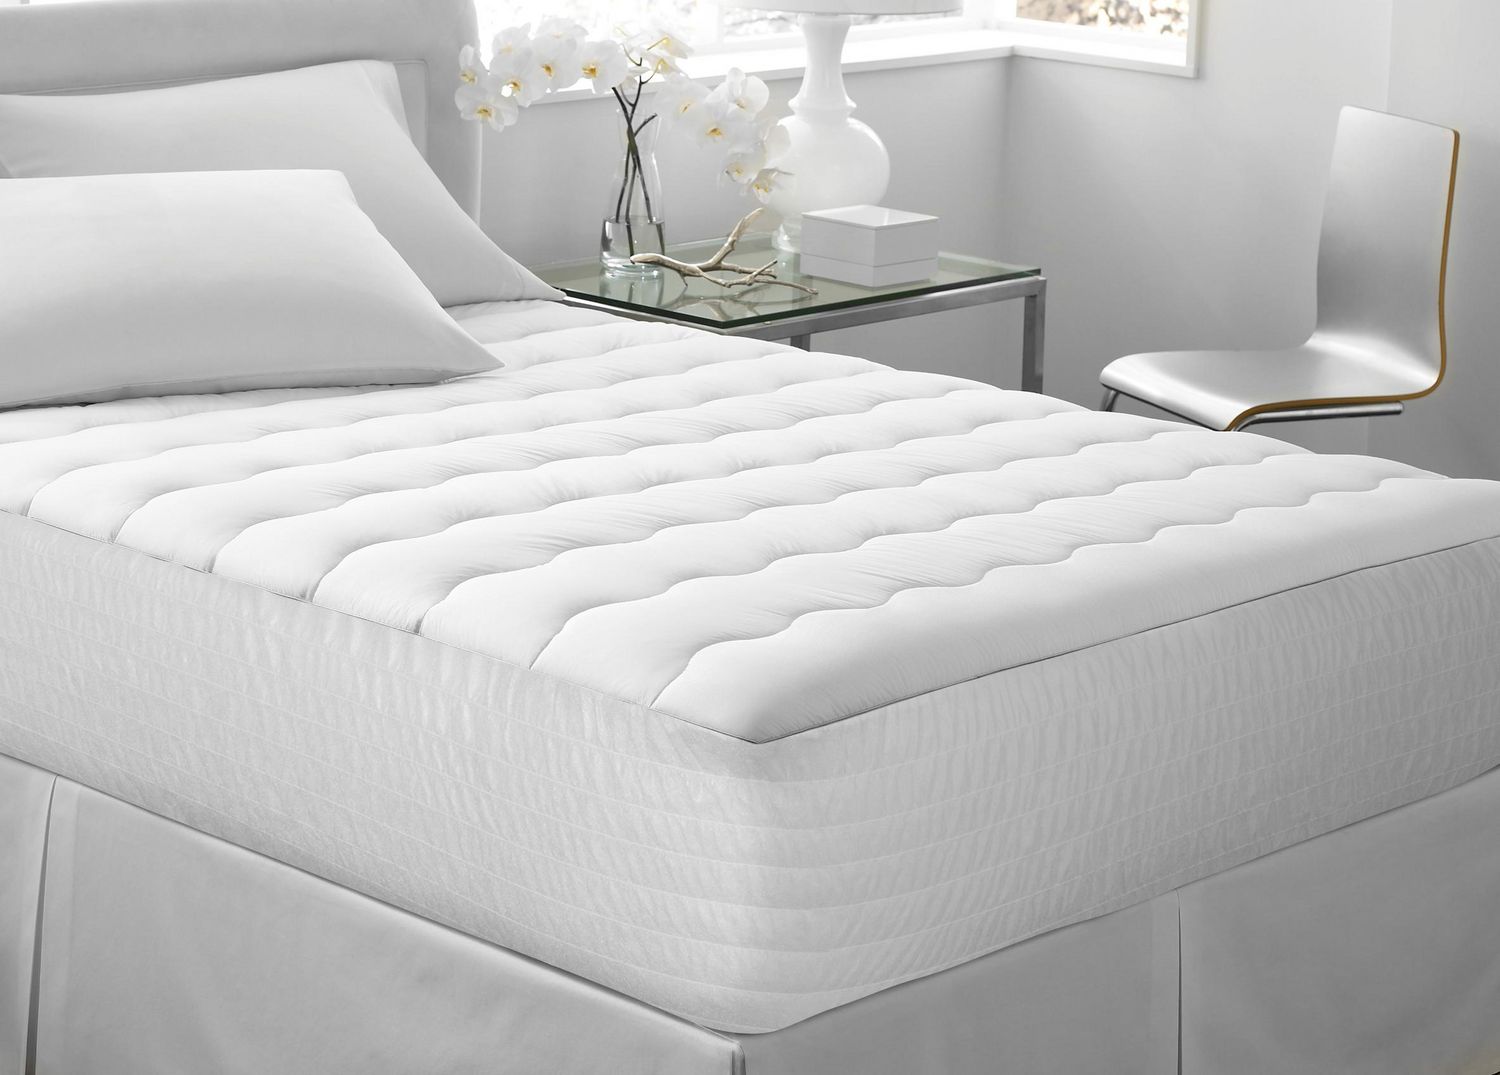 memory foam mattress pad helps back pain